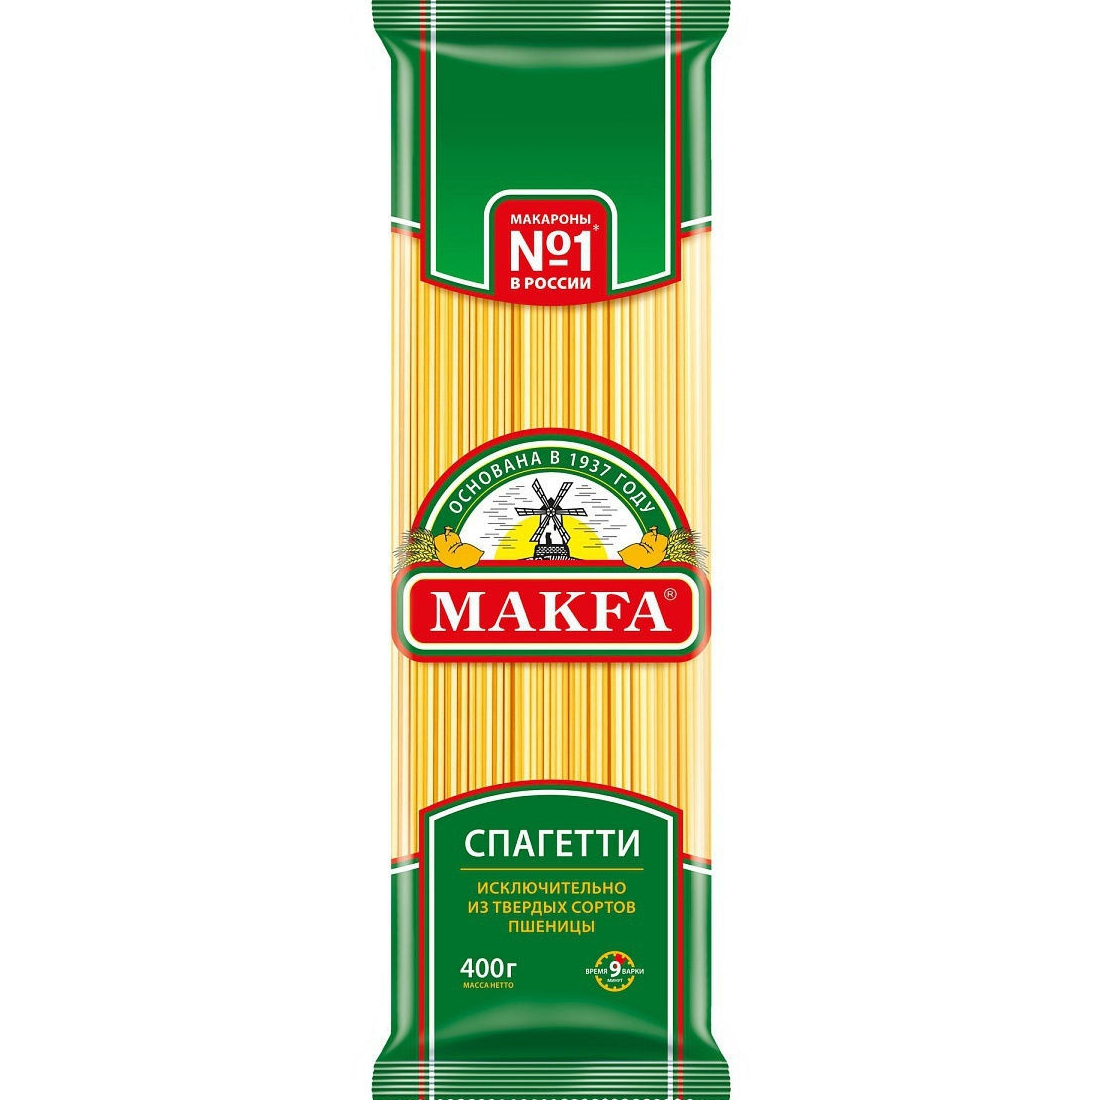 Макароны Makfa Спагетти 400 г макароны шебекинские спагетти 450 г